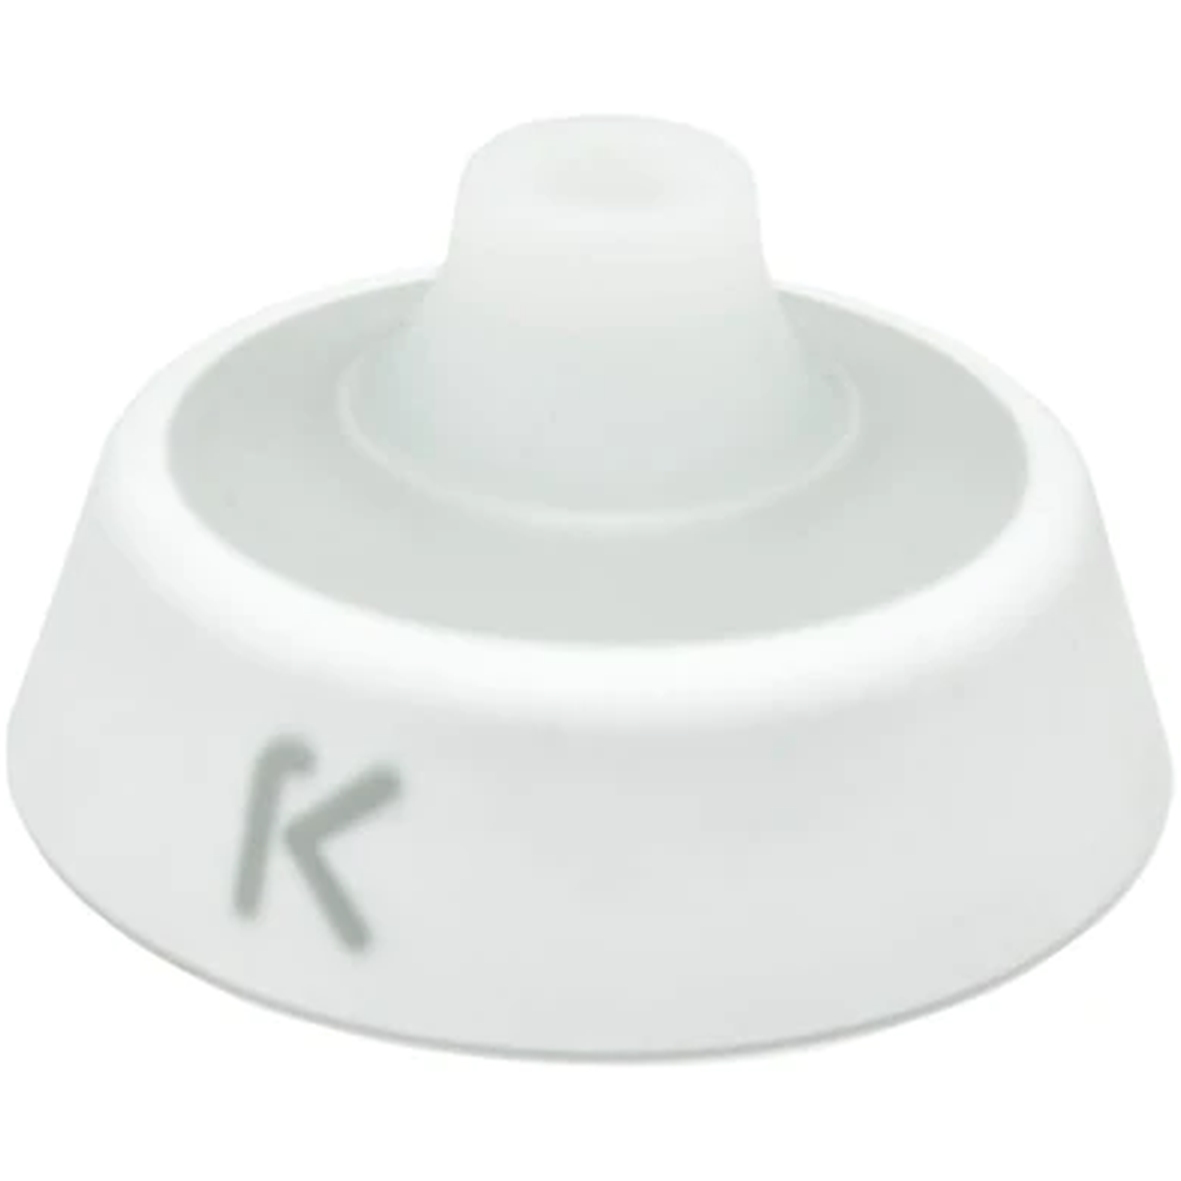 Productfoto van KEEGO Easy Clean Dop - titanium white